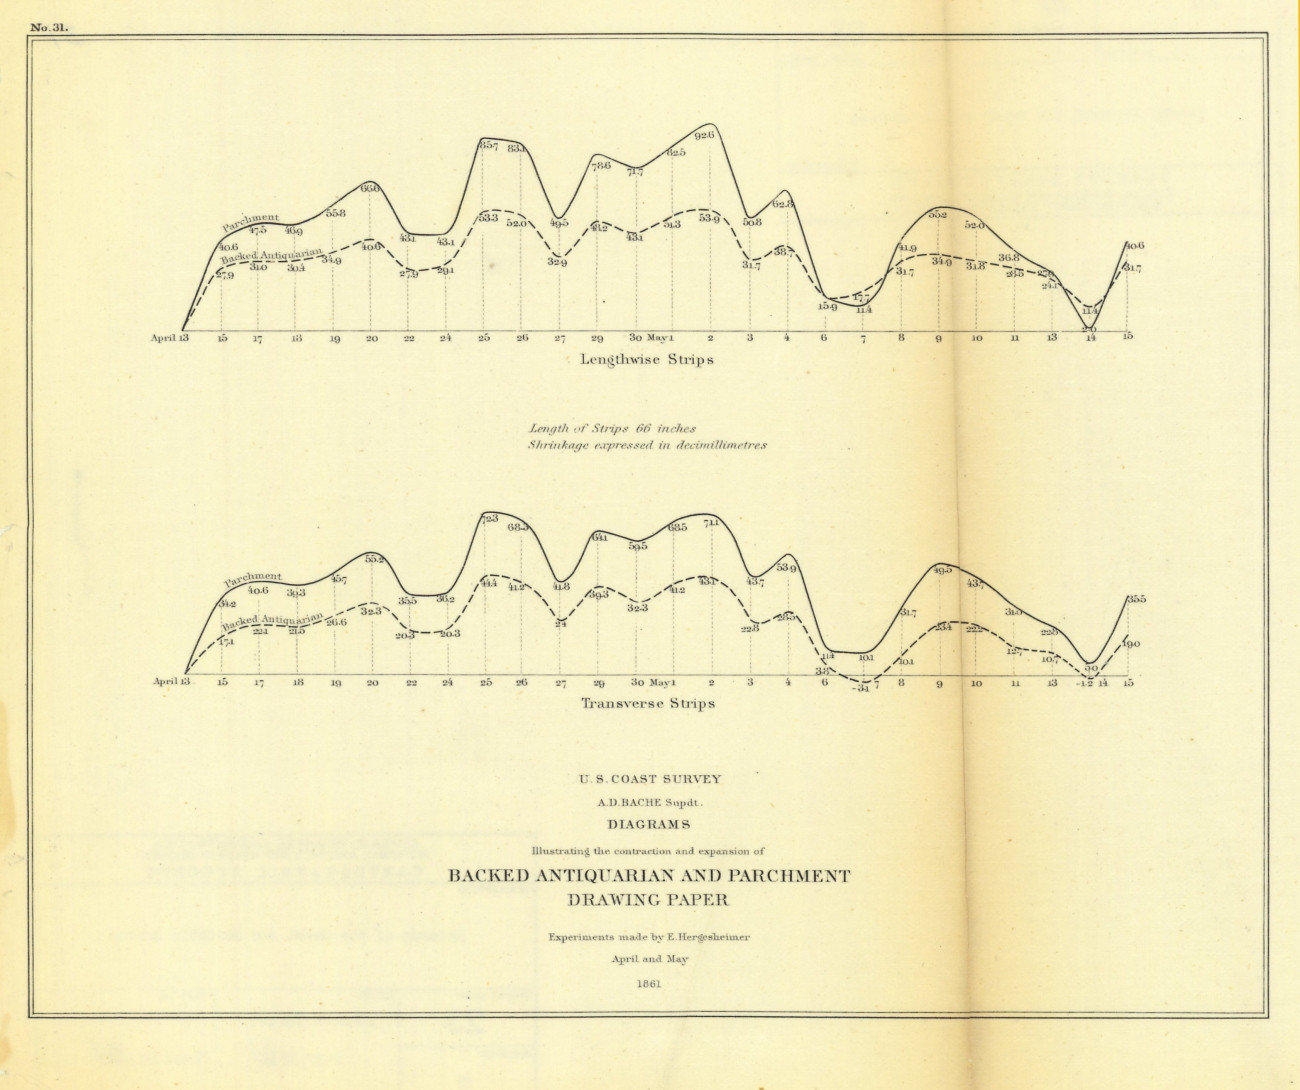 Annual Report 1861